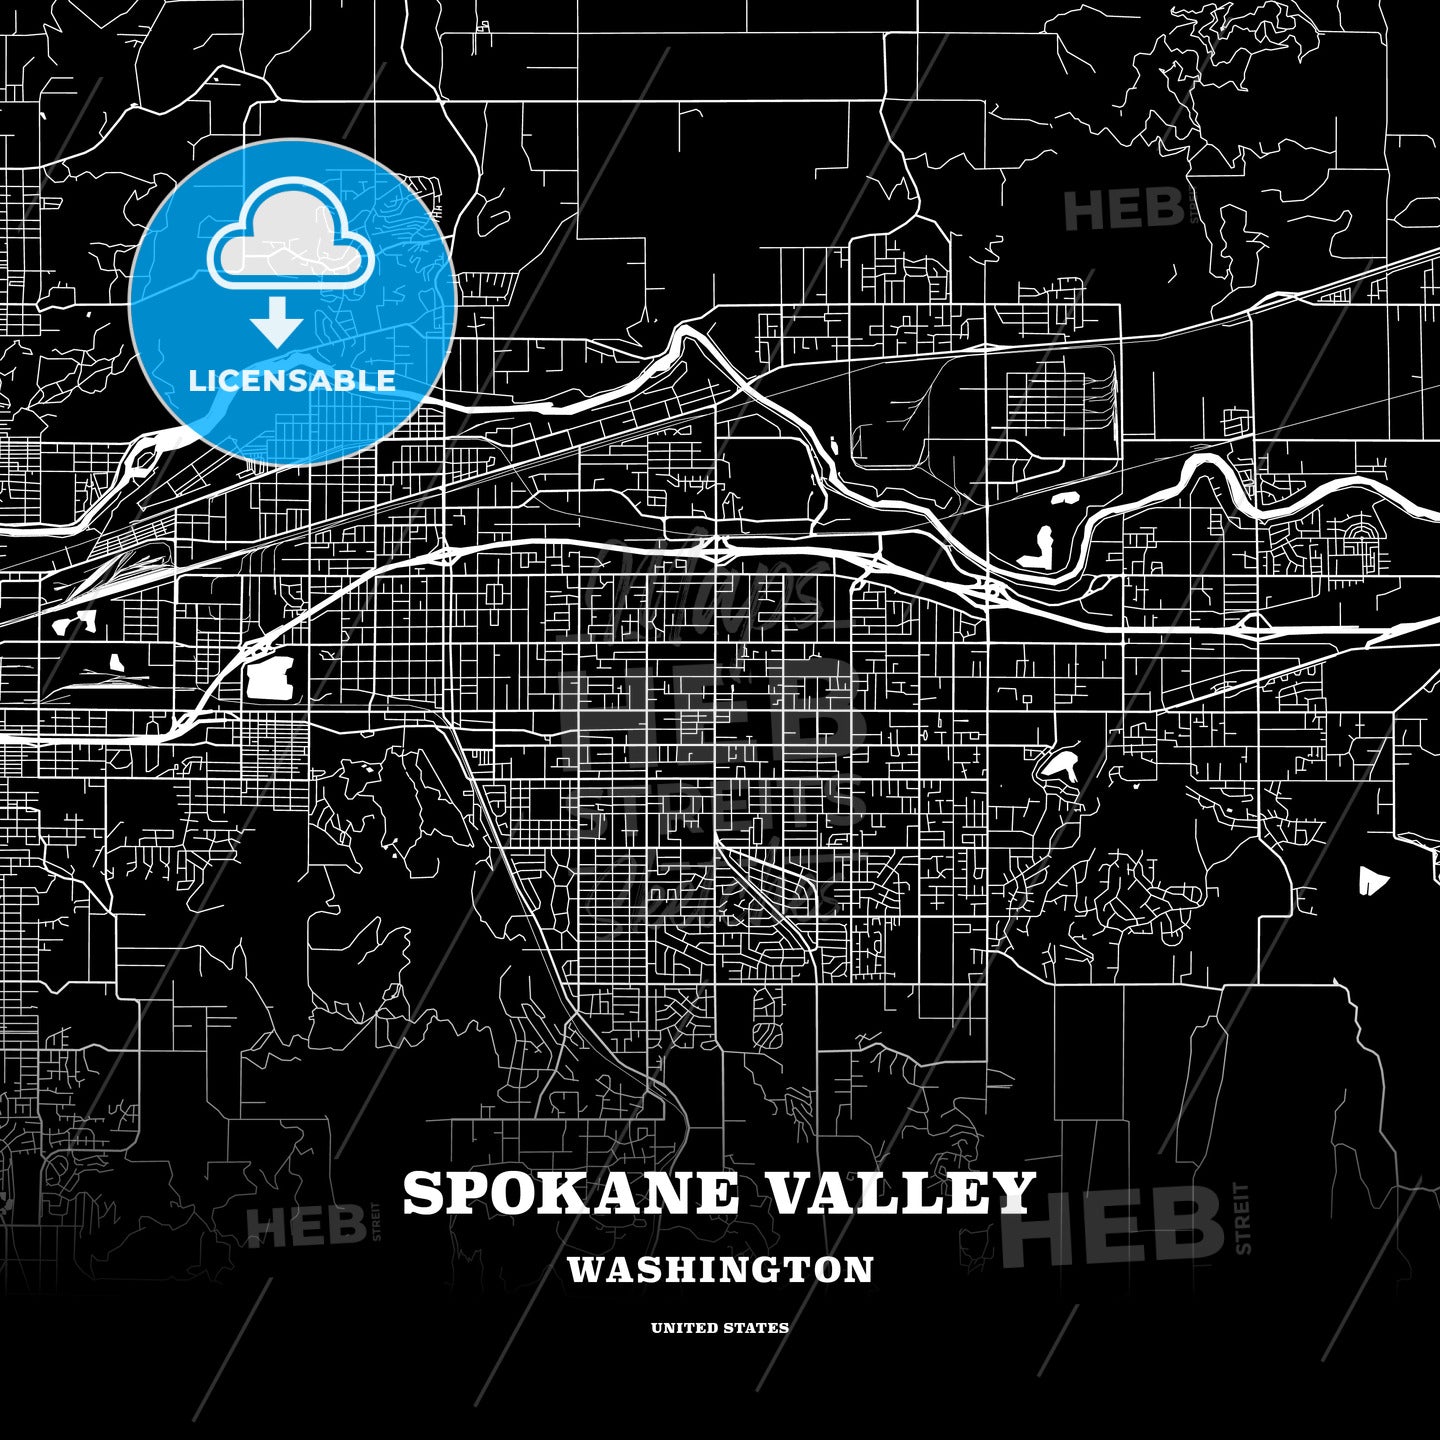 Spokane Valley, Washington, USA map